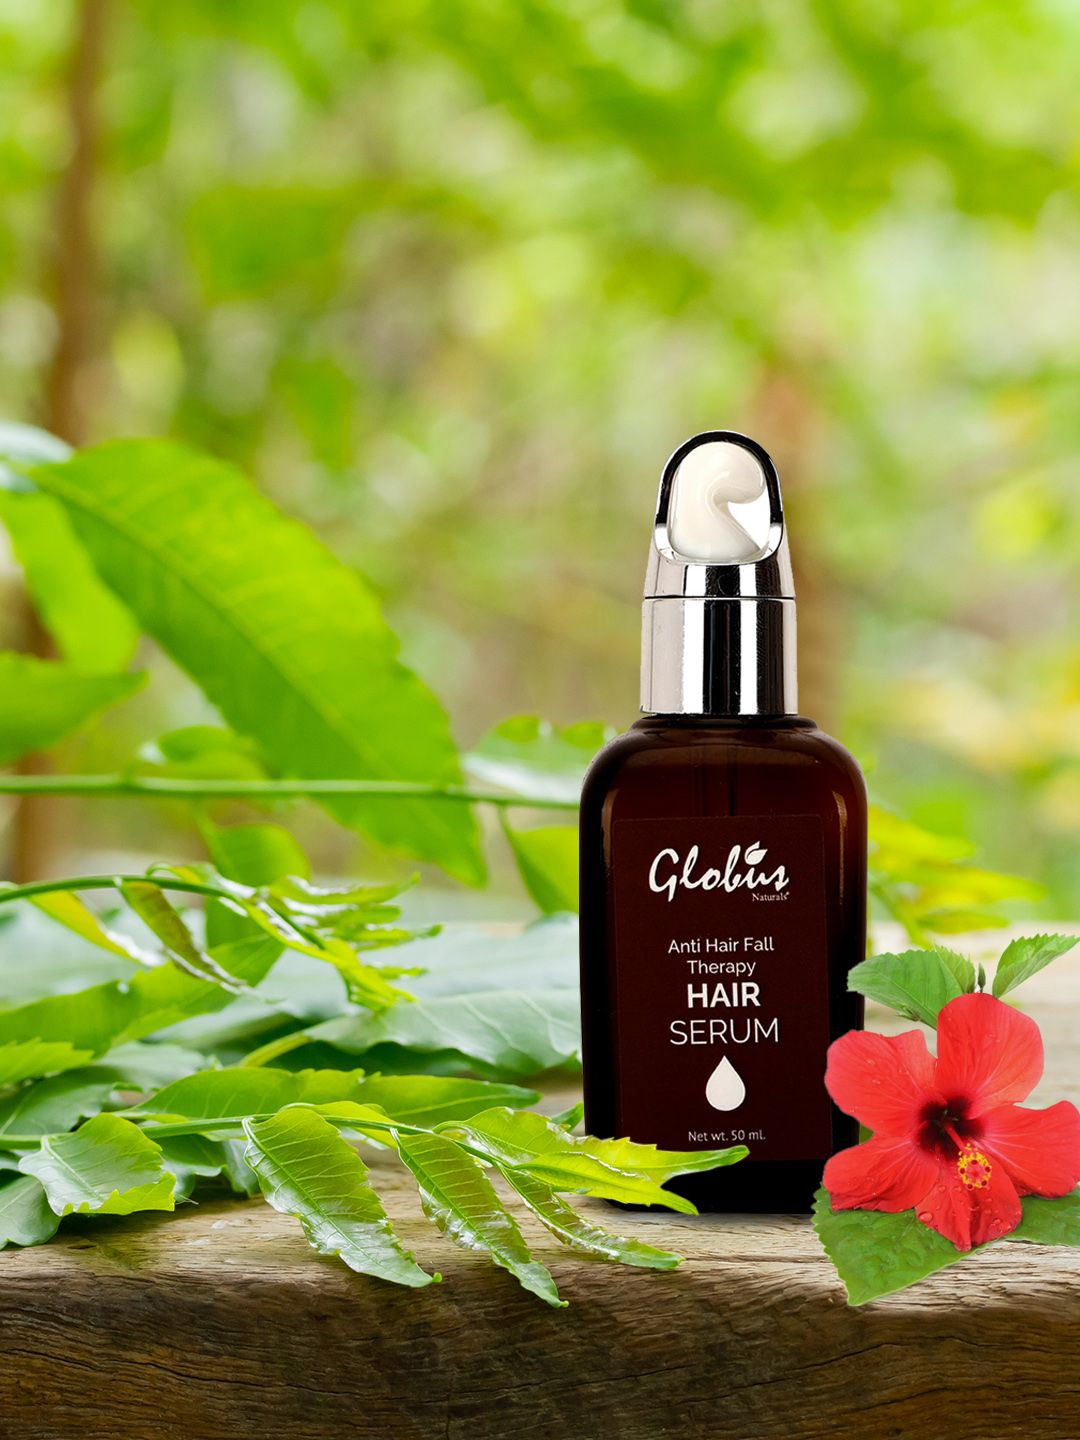 Globus naturals Anti Hair Fall Therapy Hair Serum - 50 ml Price in India